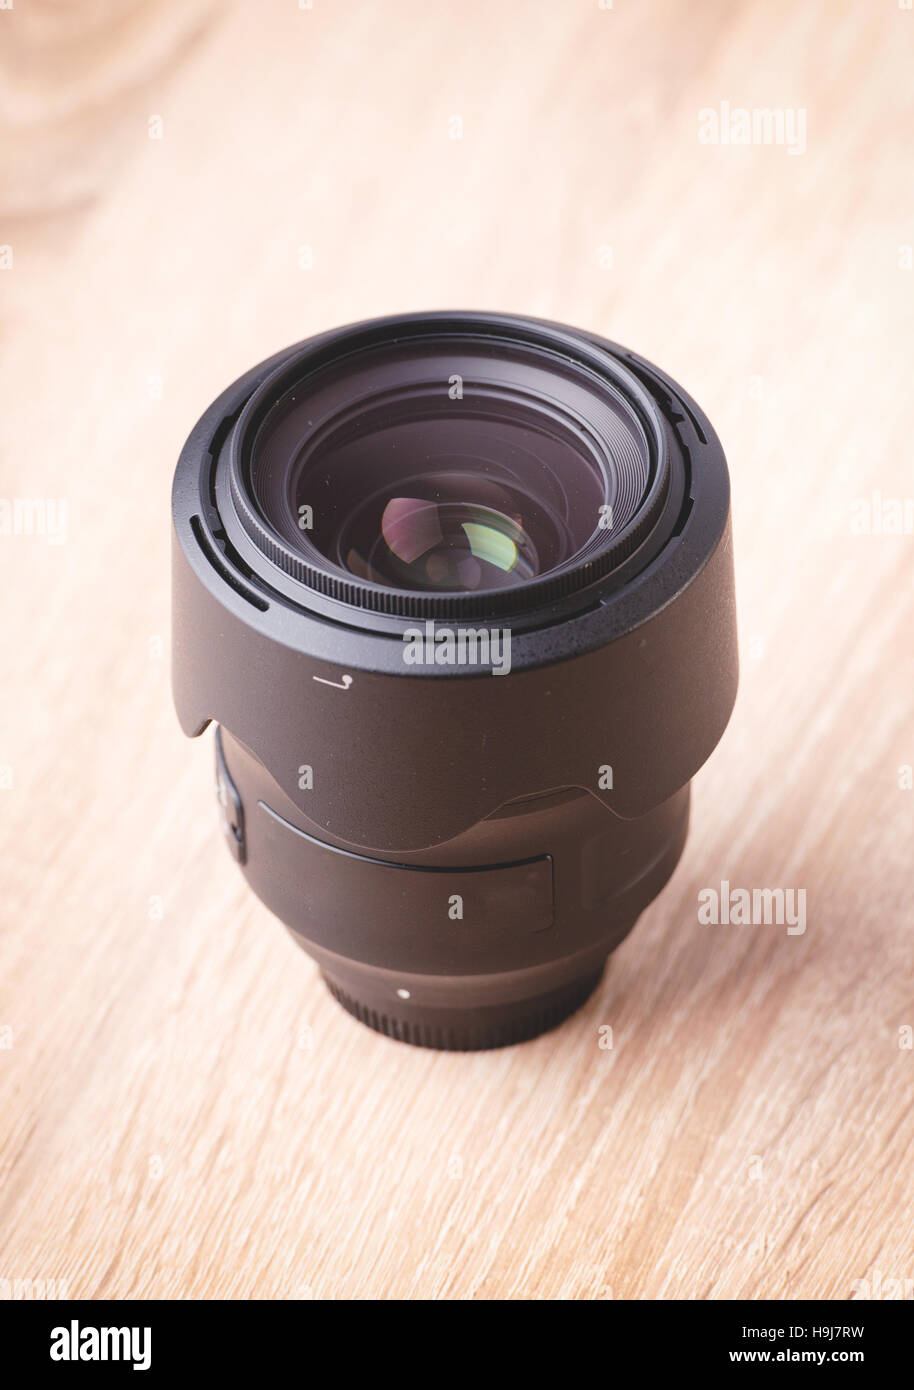 Camera lens at desk Stock Photo